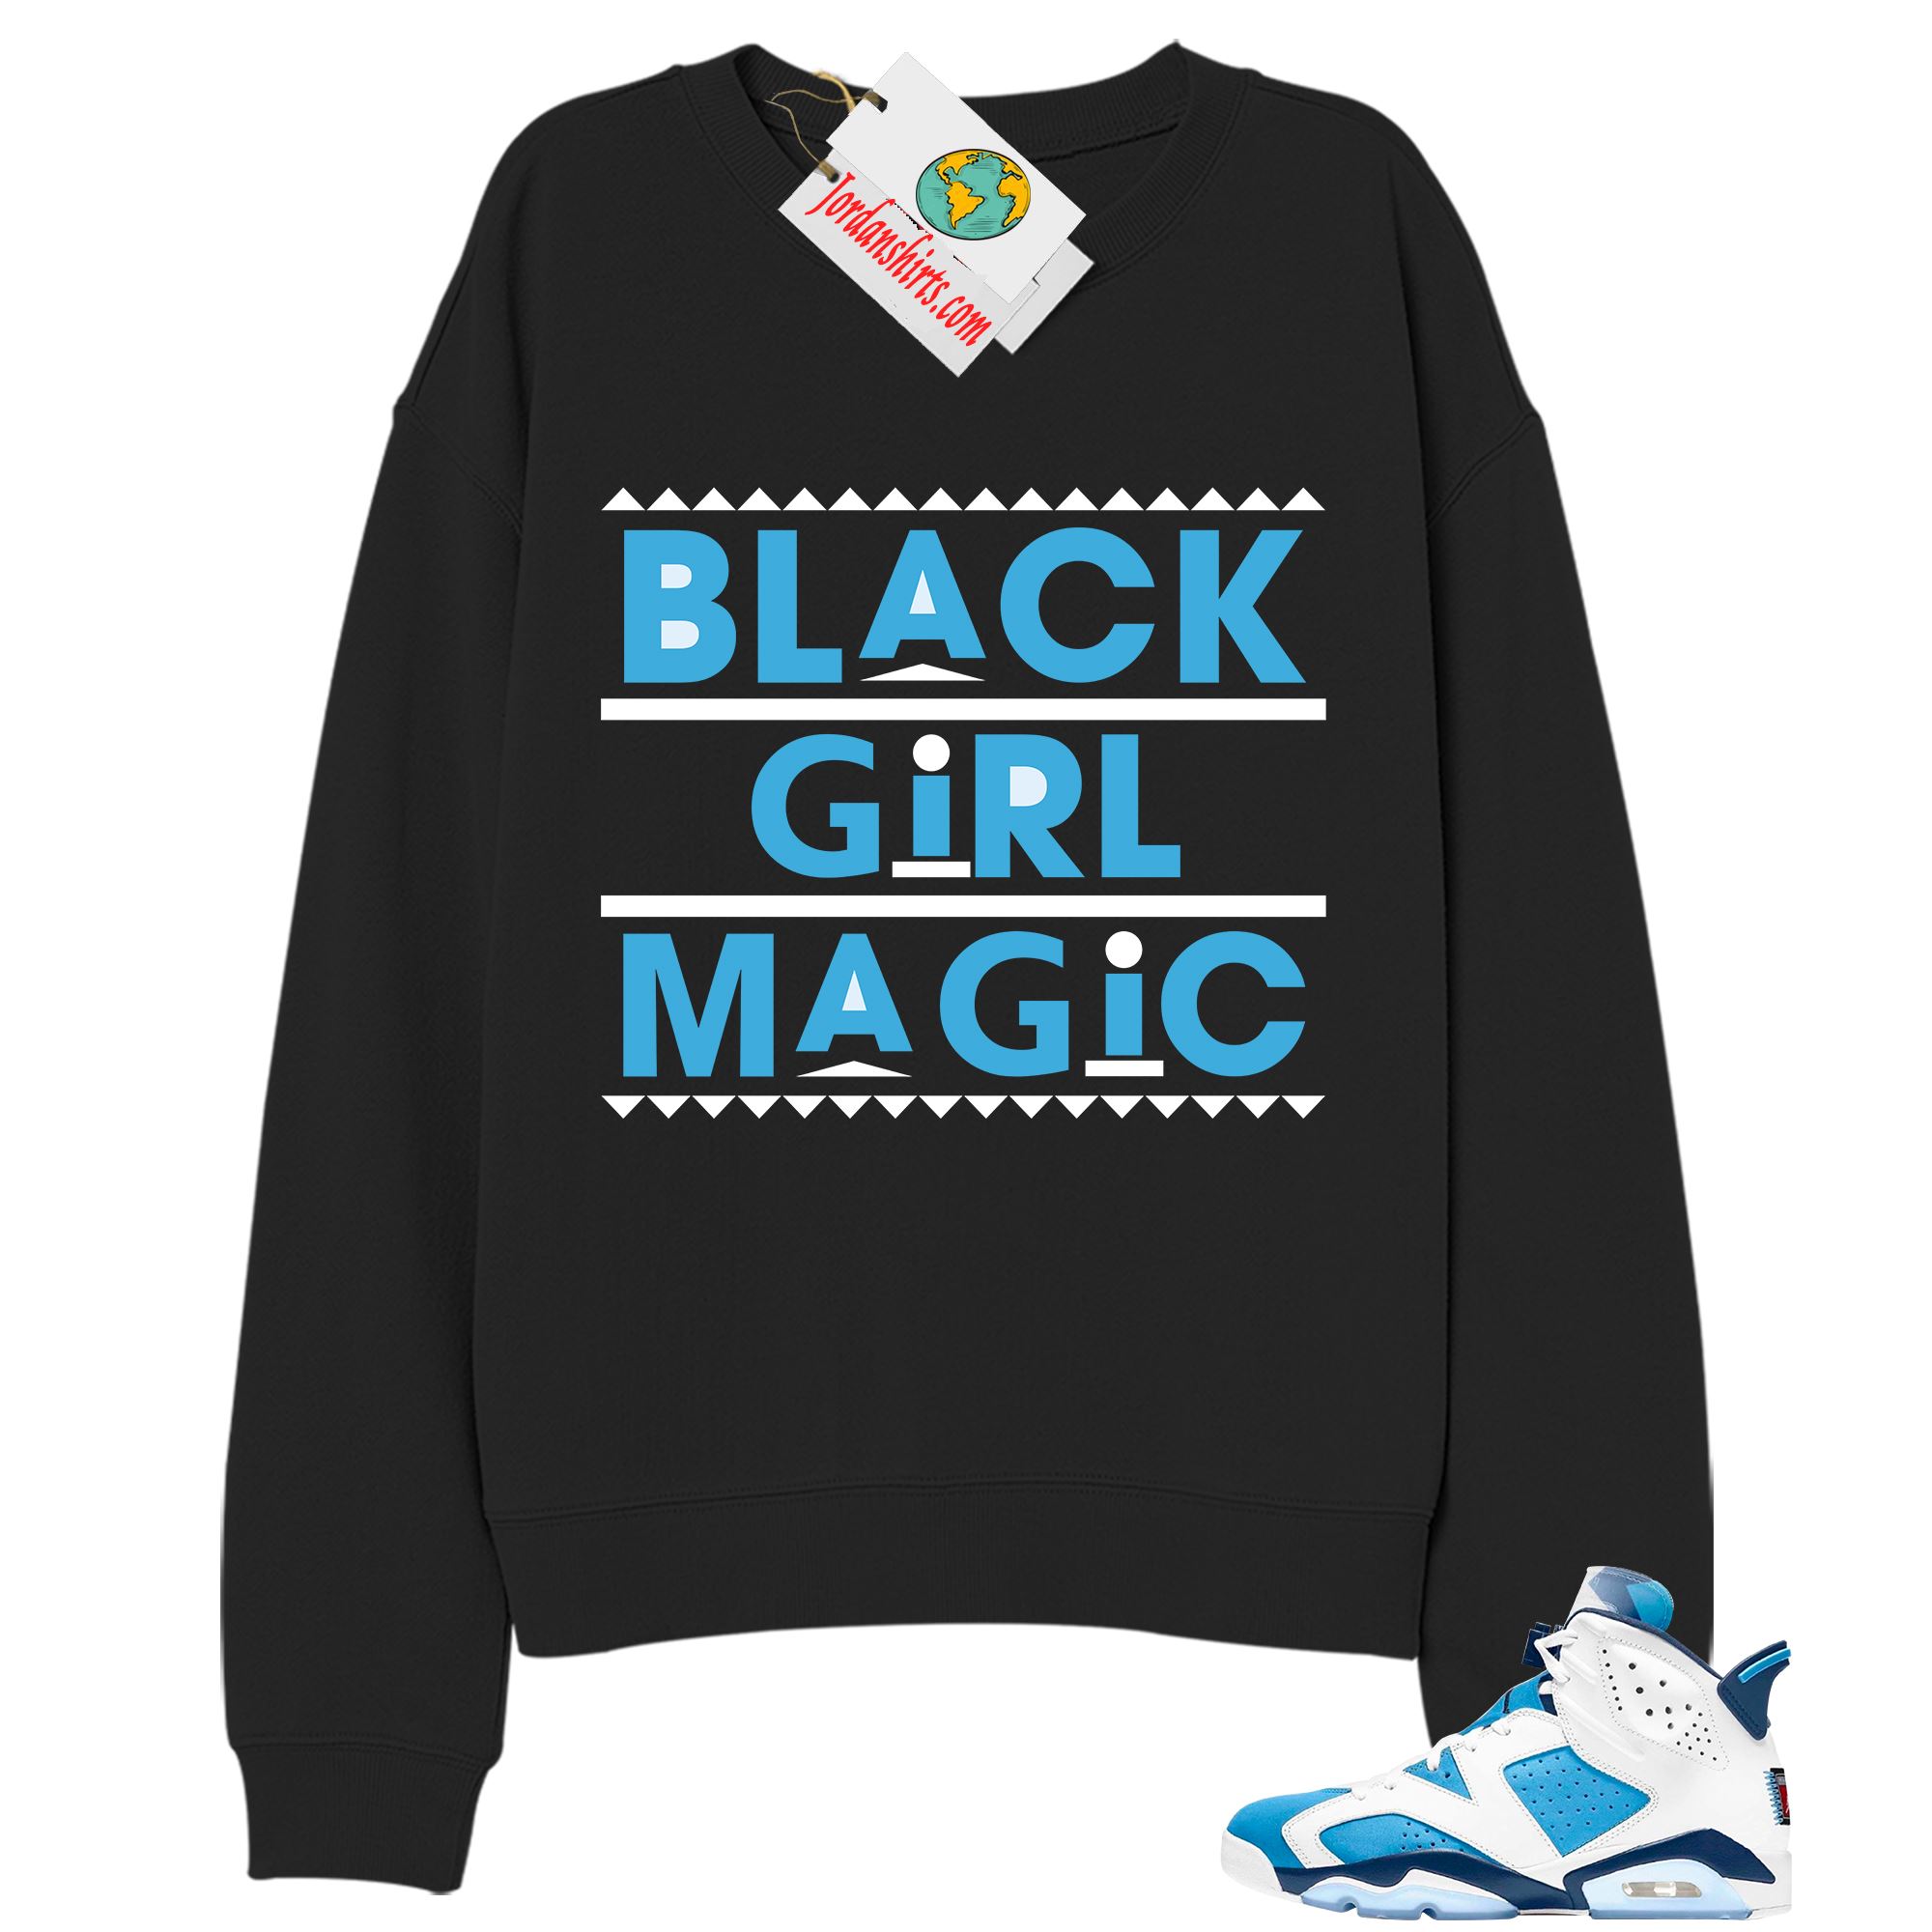 Jordan 6 Sweatshirt, Black Girl Magic Black Sweatshirt Air Jordan 6 Unc 6s Size Up To 5xl